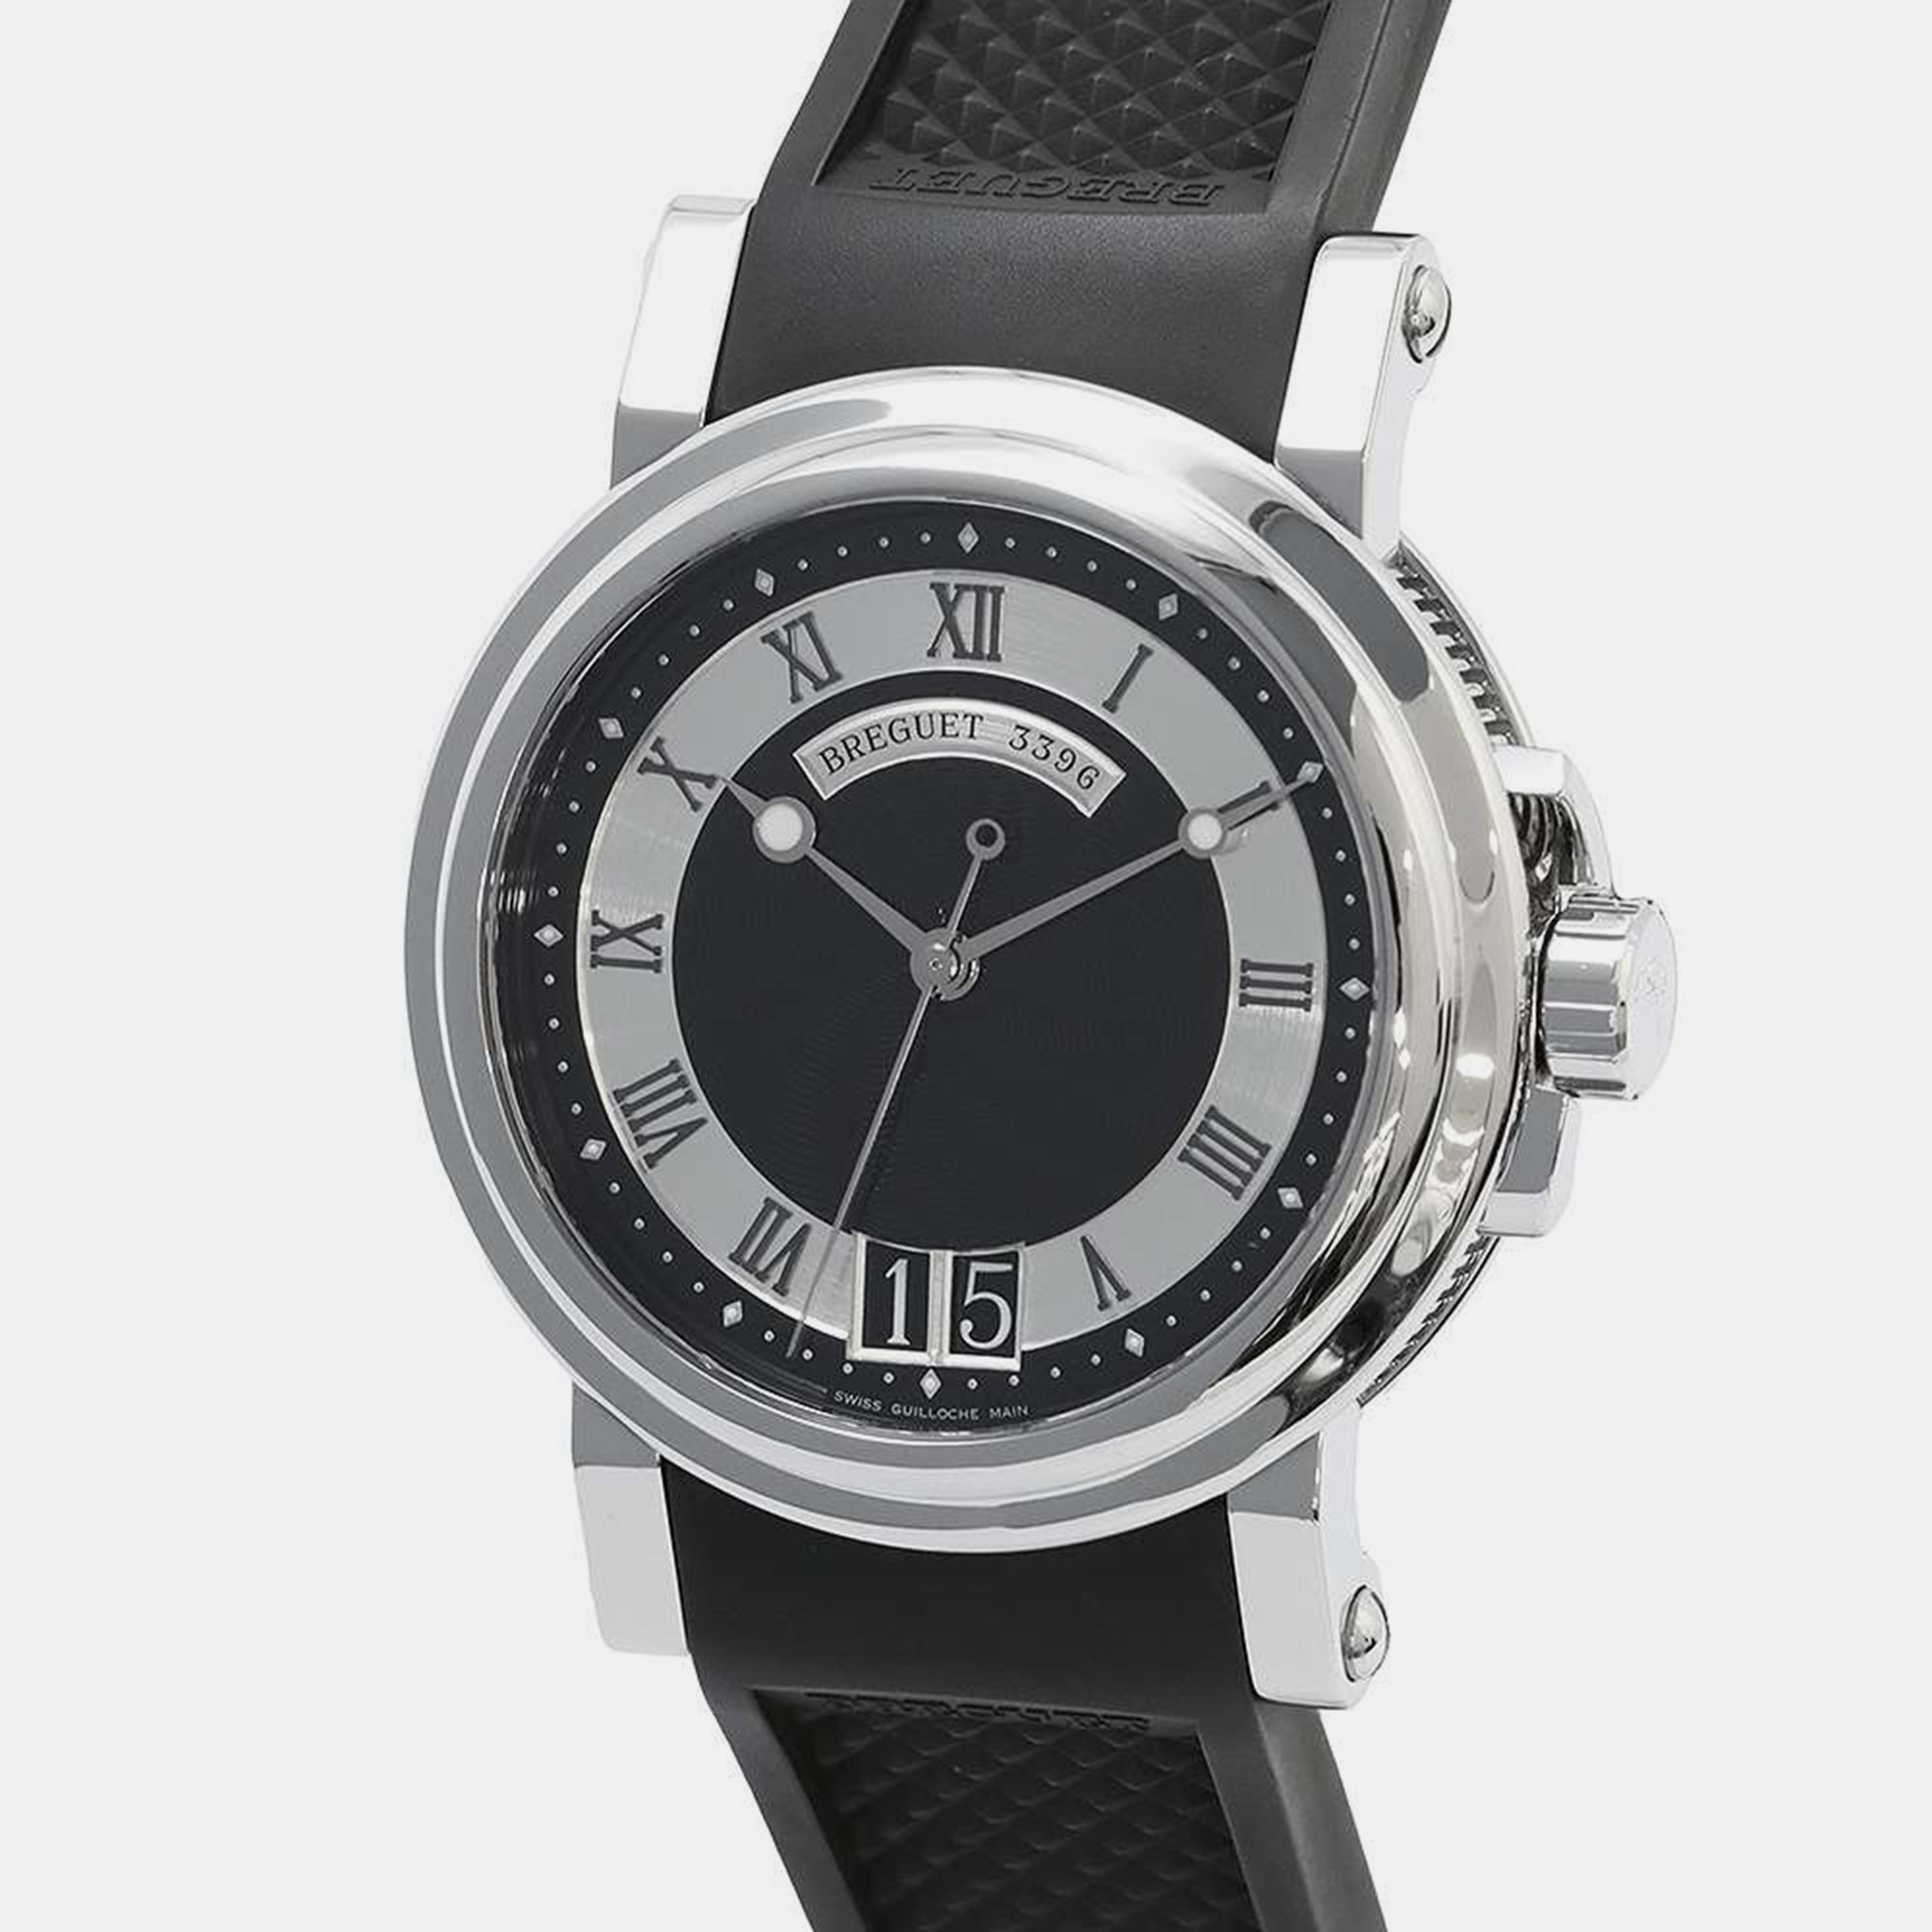 Breguet black stainless steel marine 5817st/92/5v8 automatic men's wristwatch 39 mm